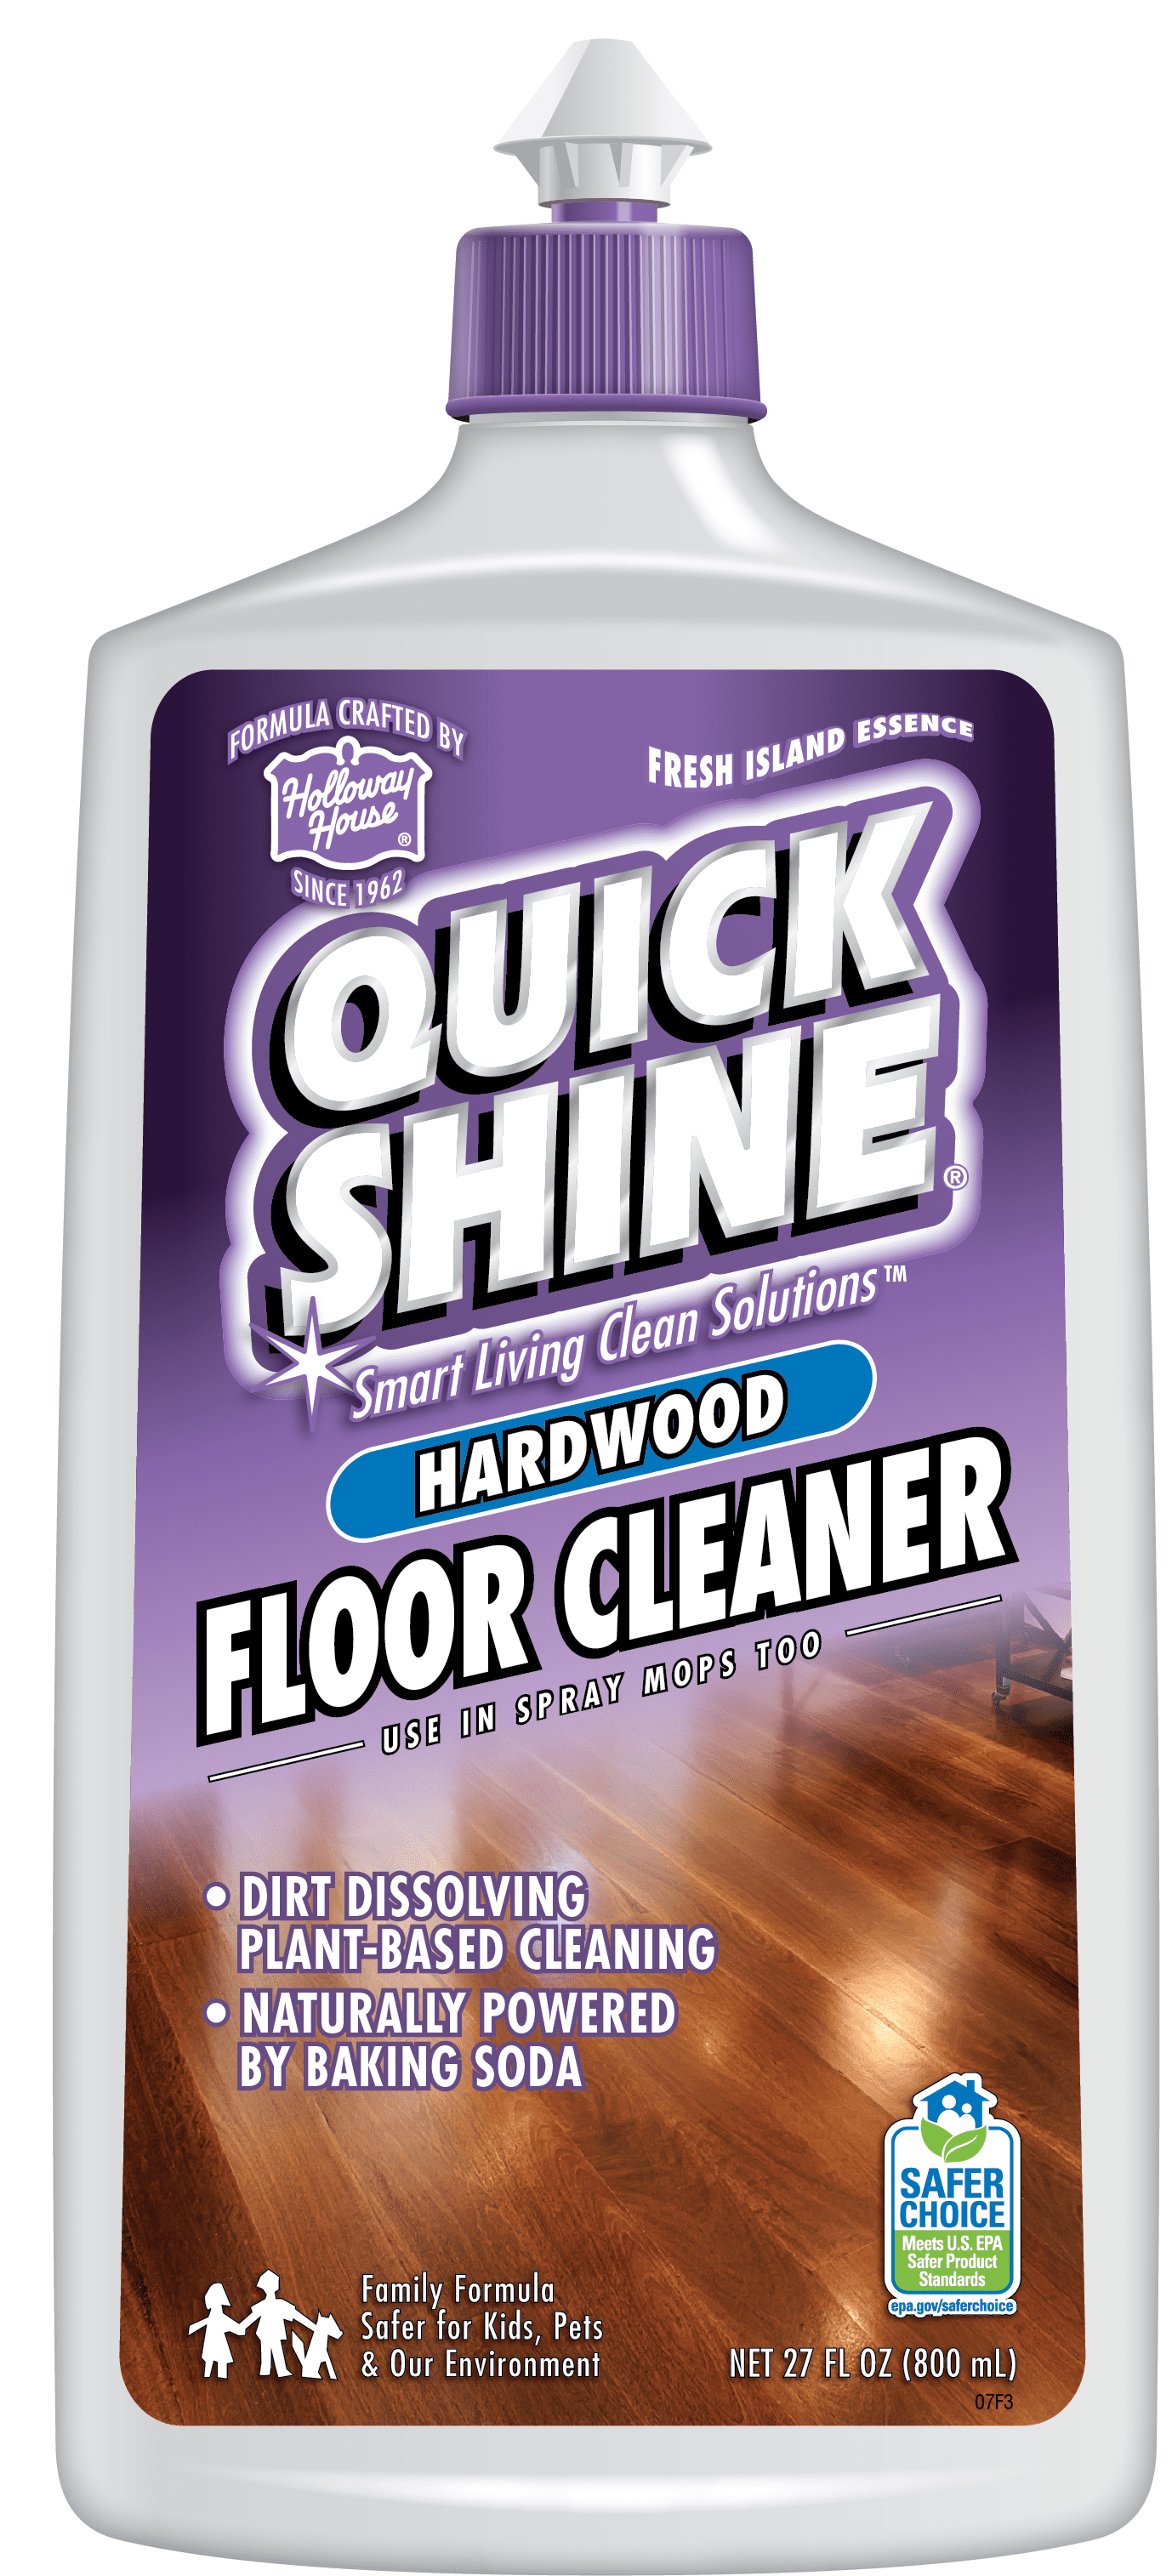 Traffic Hardwood Floor Cleaner, Can Fabuloso Clean Hardwood Floors